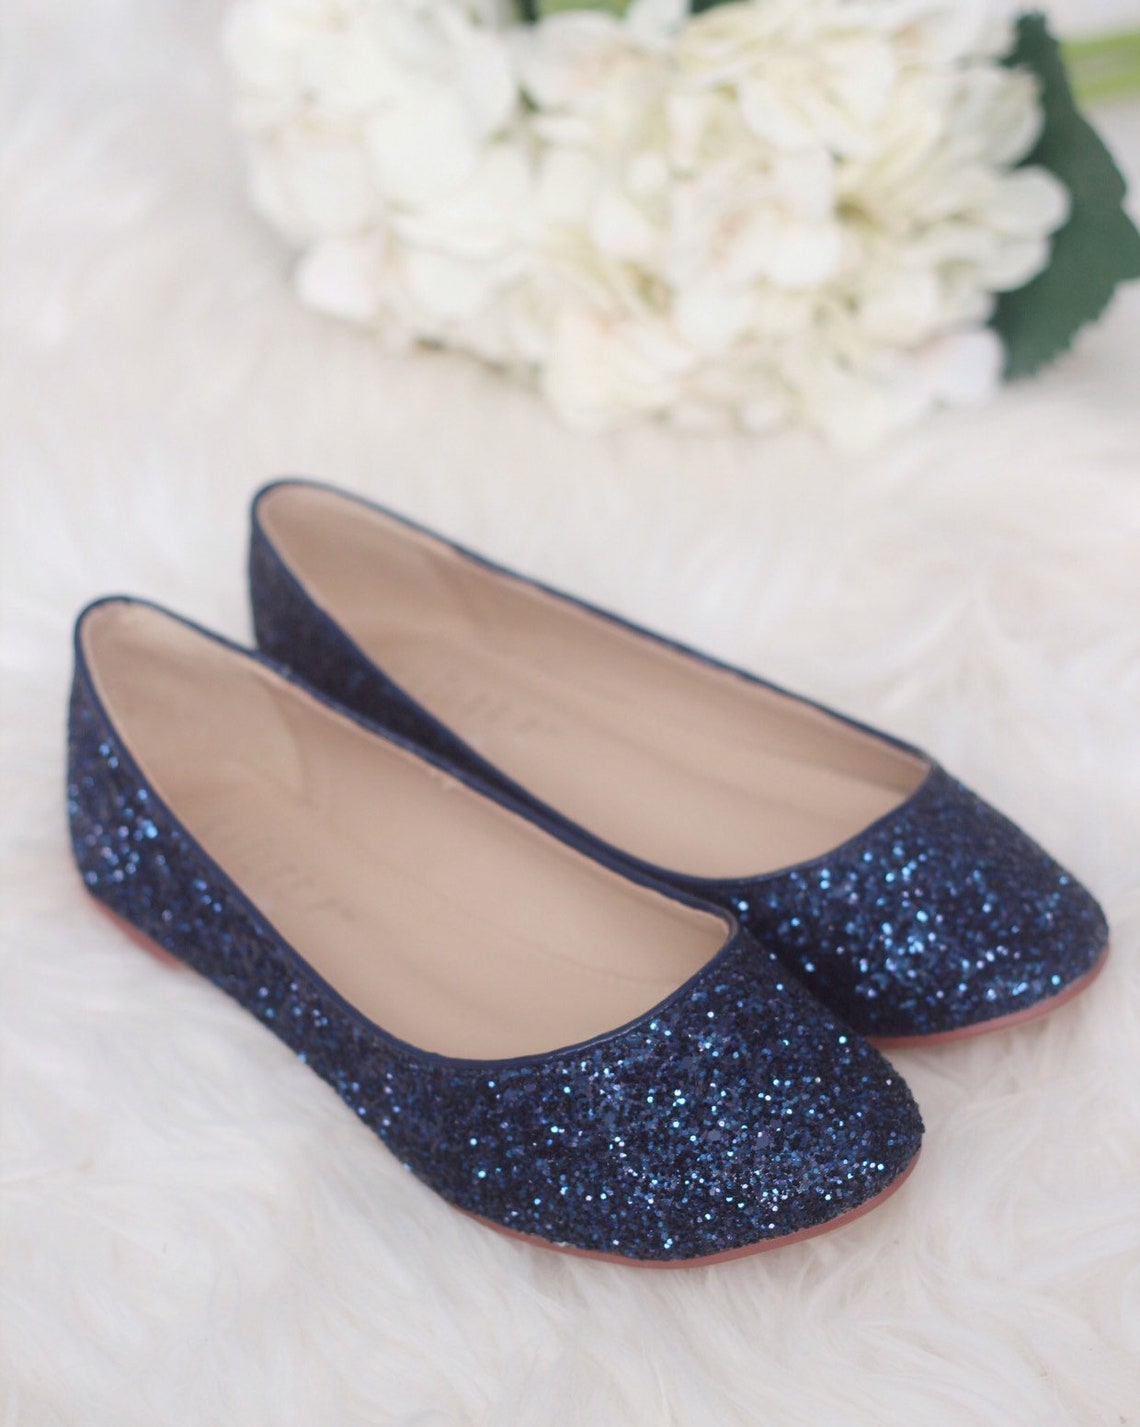 NAVY BLUE ROCK Glitter Flats with Back Satin Bow Bridal | Etsy